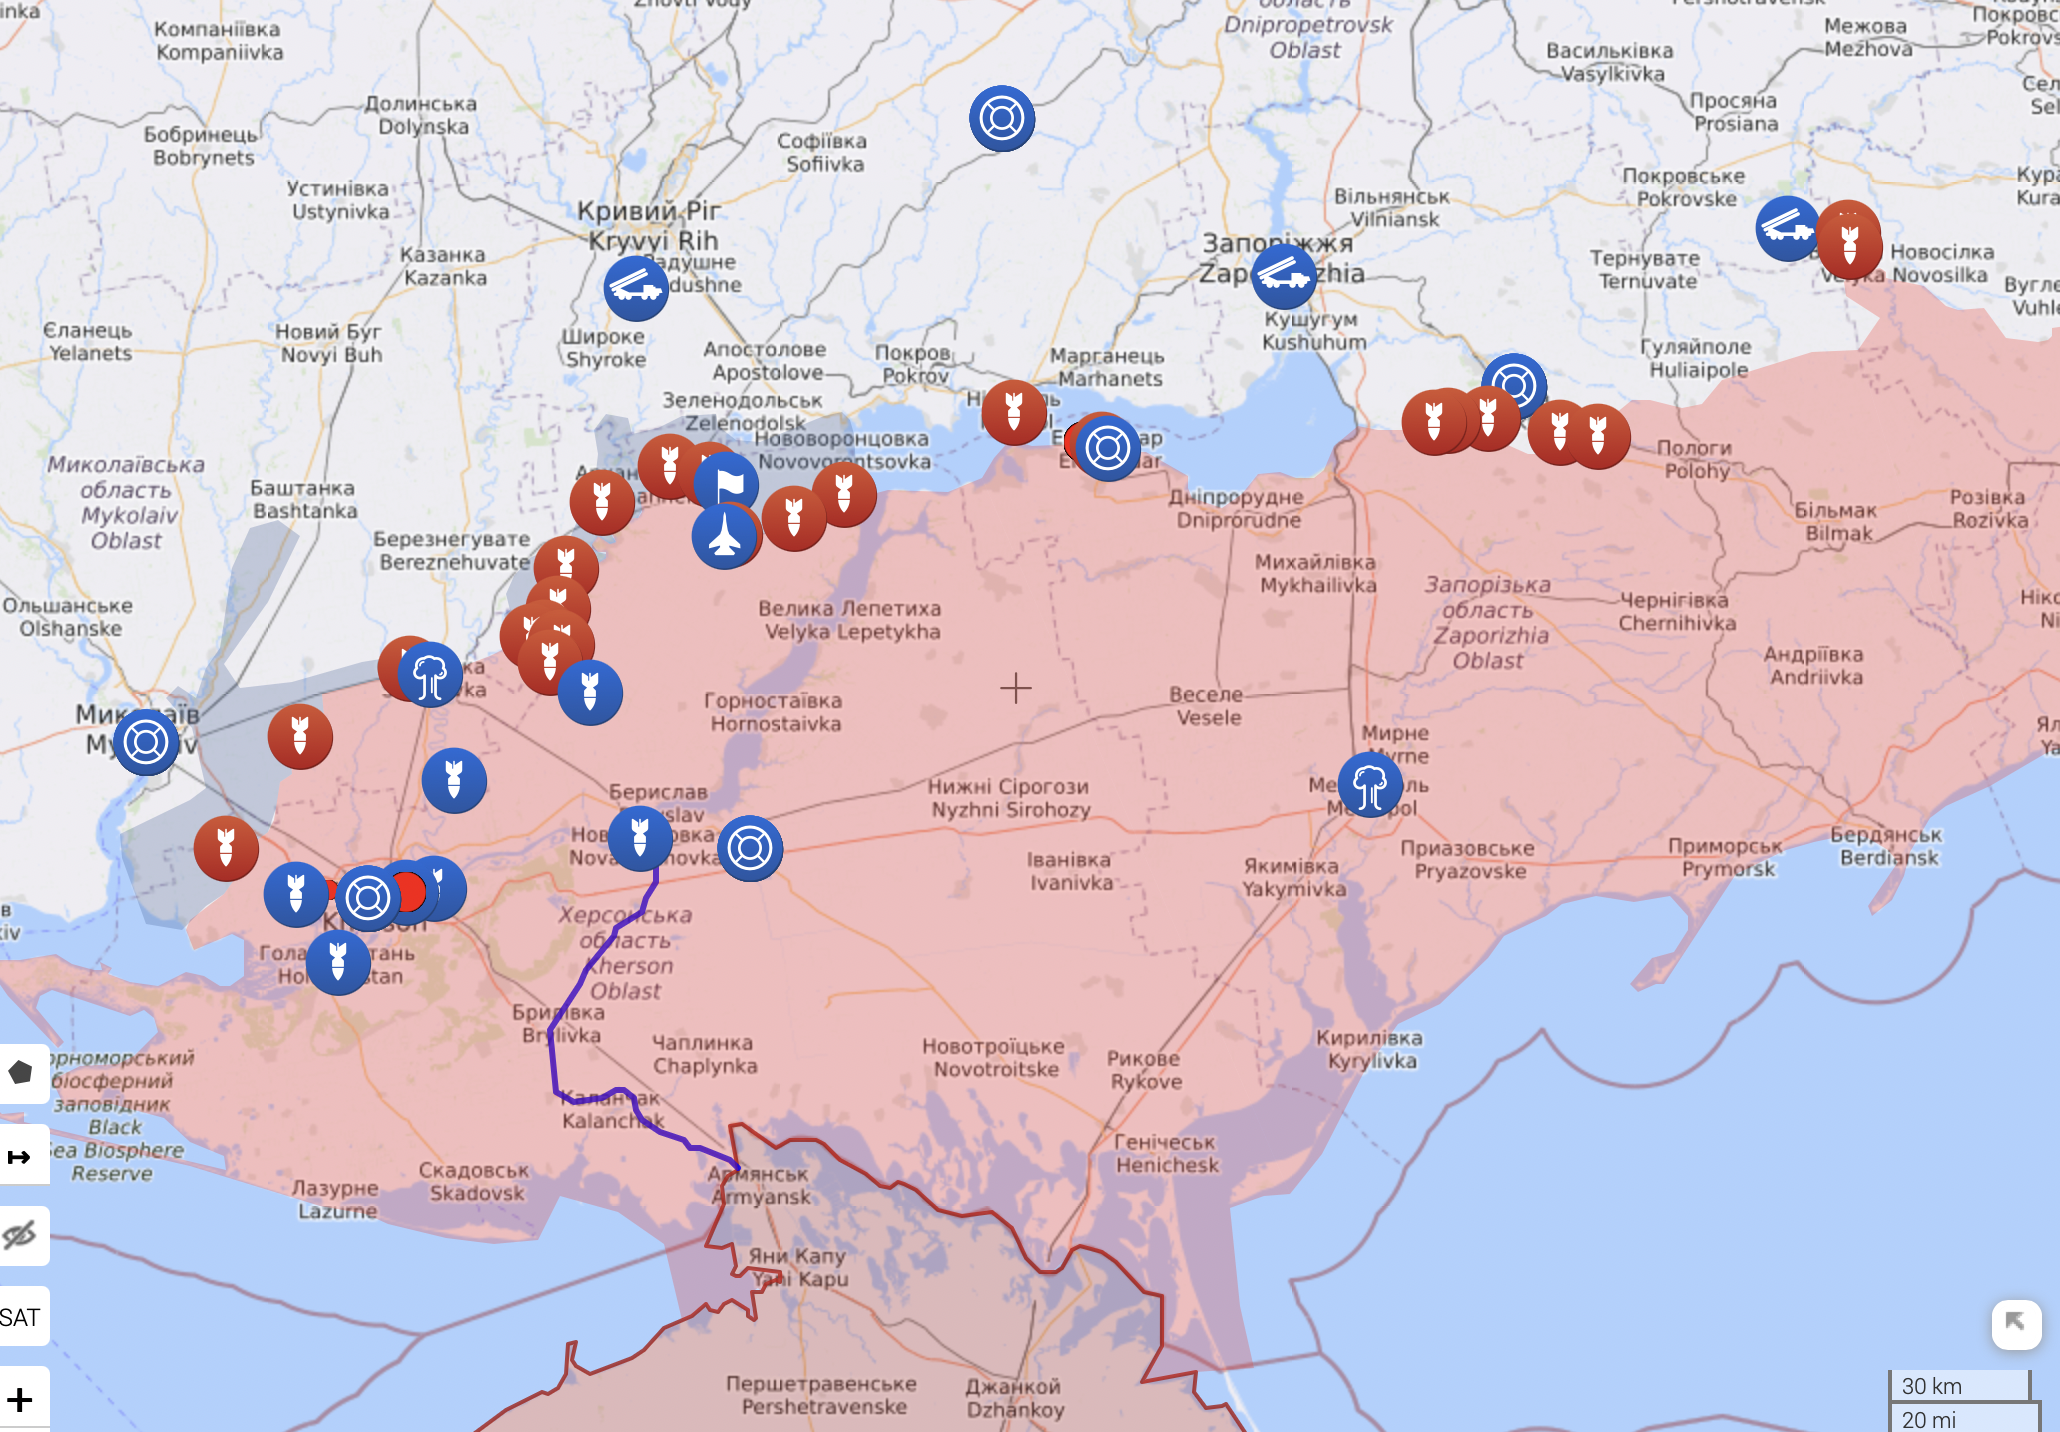 Карта войны в Украине на 8 сентября: какова ситуация на фронтах